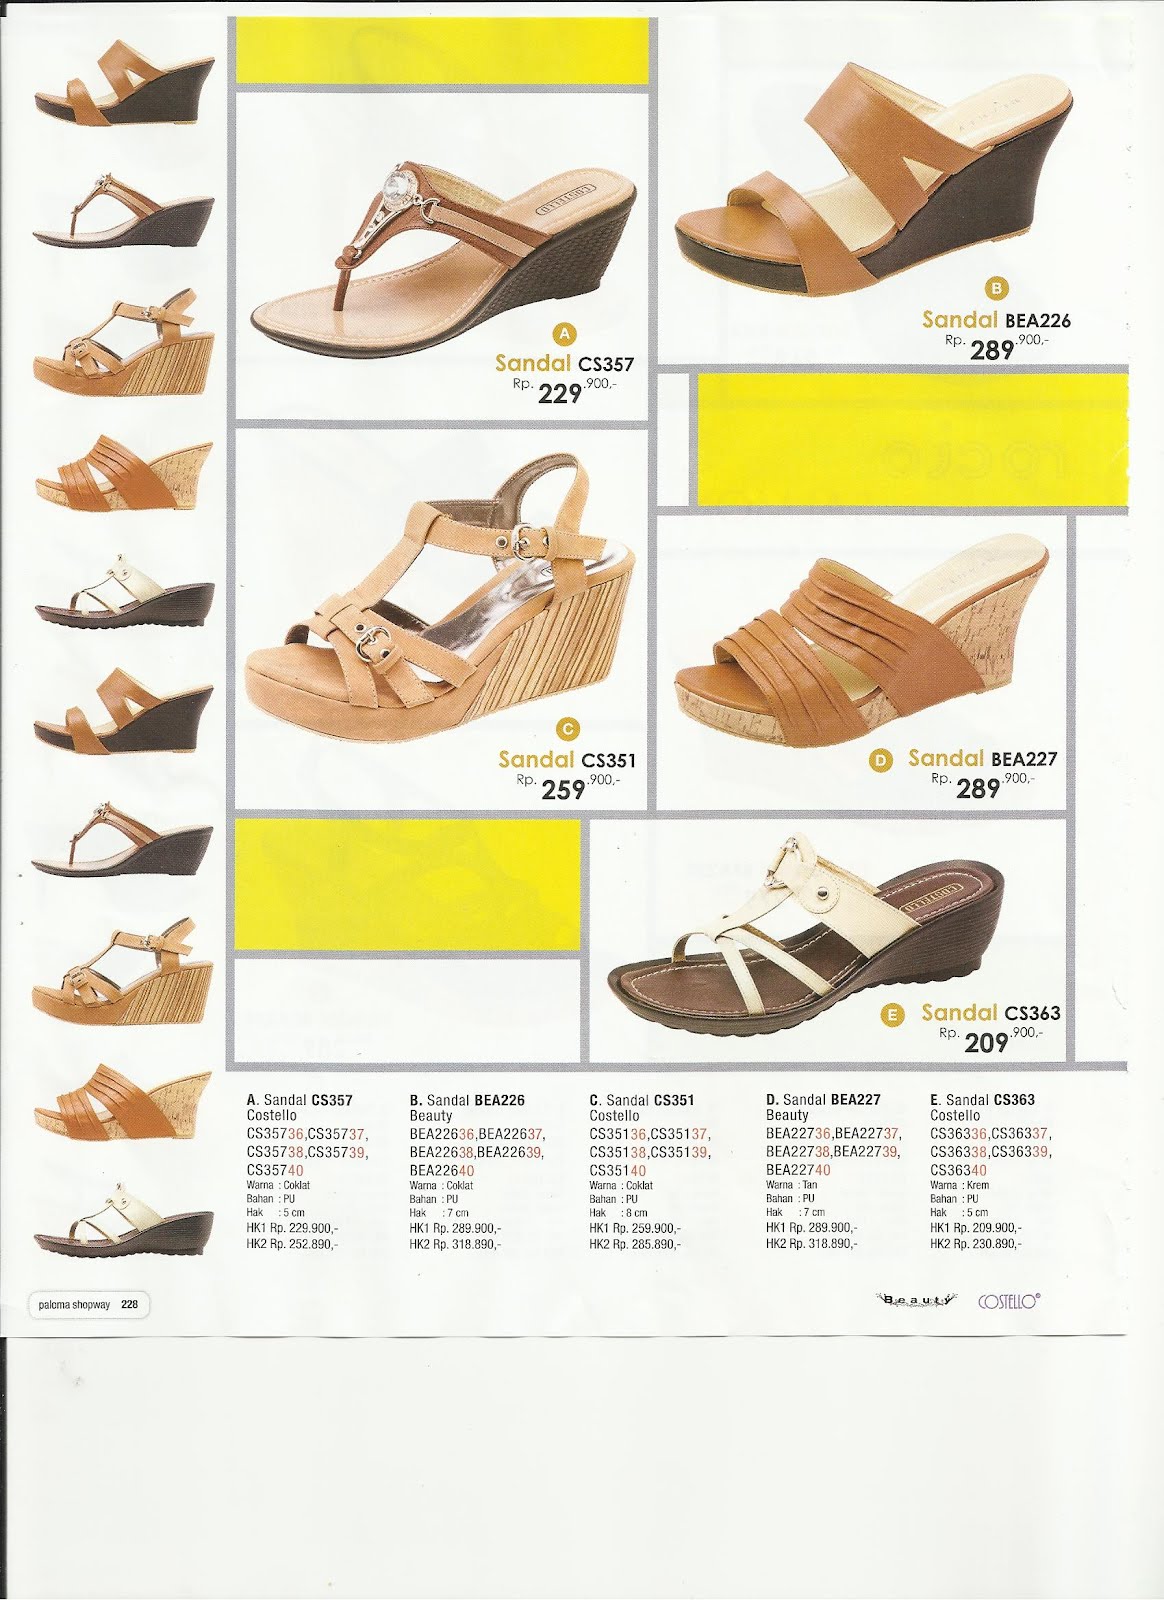  Katalog  Sepatu Sandal  Wanita  Trend 2012 CUTIE SHOP